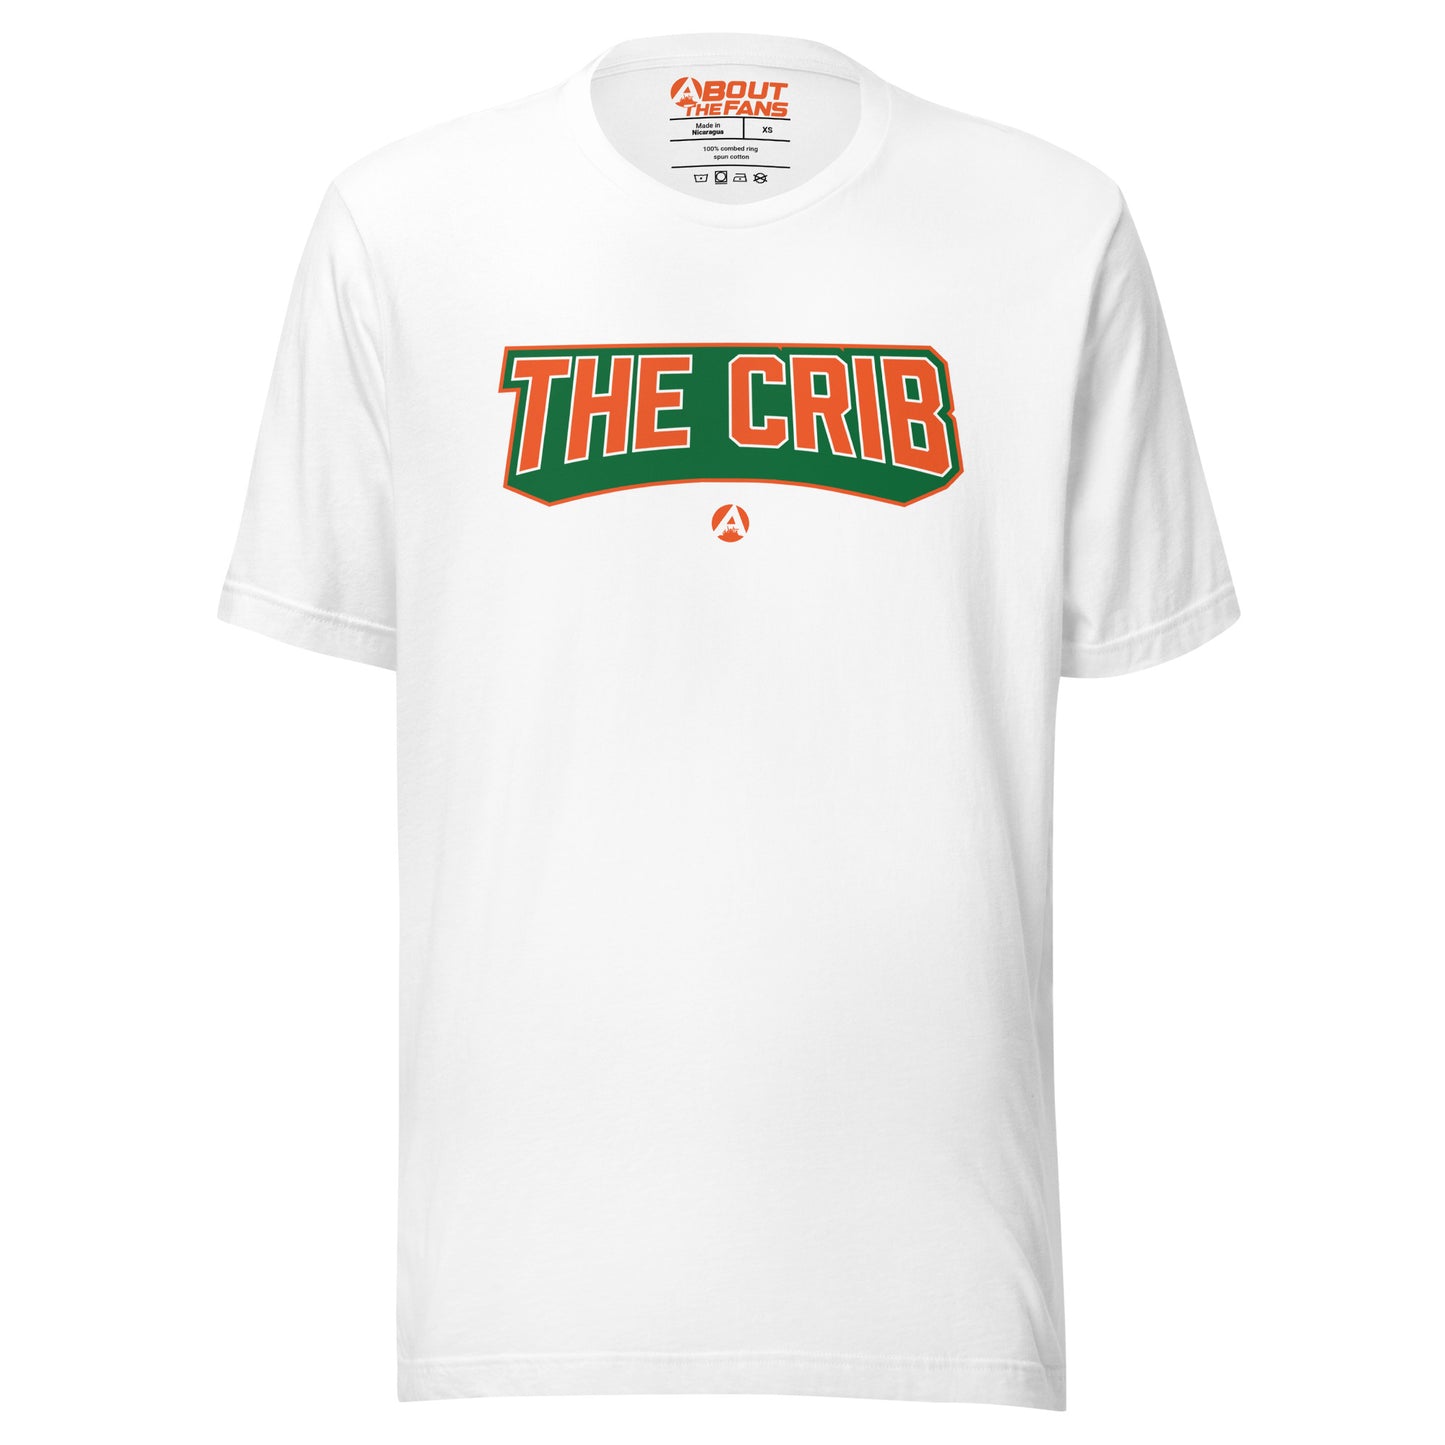 The Crib 305 Shirt